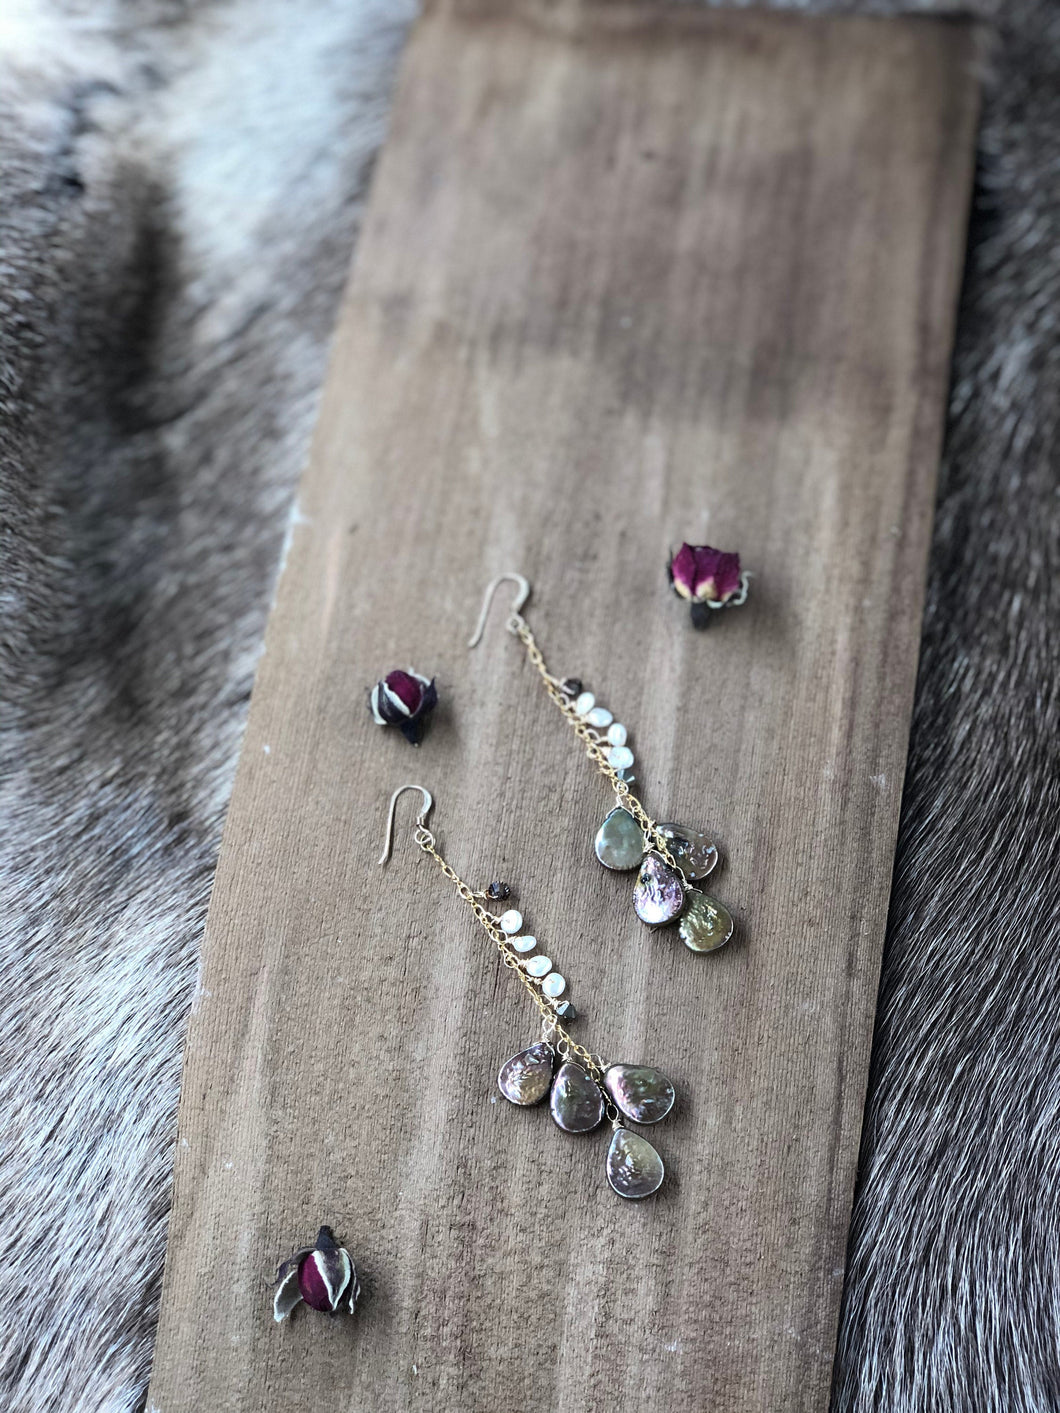 Sage Green Iridescent Freshwater Pearl Earrings/Cream Freshwater Pearl/ Czech Glass /Cascading Pearl Earrings on Gold Filled 14 Karat Chain